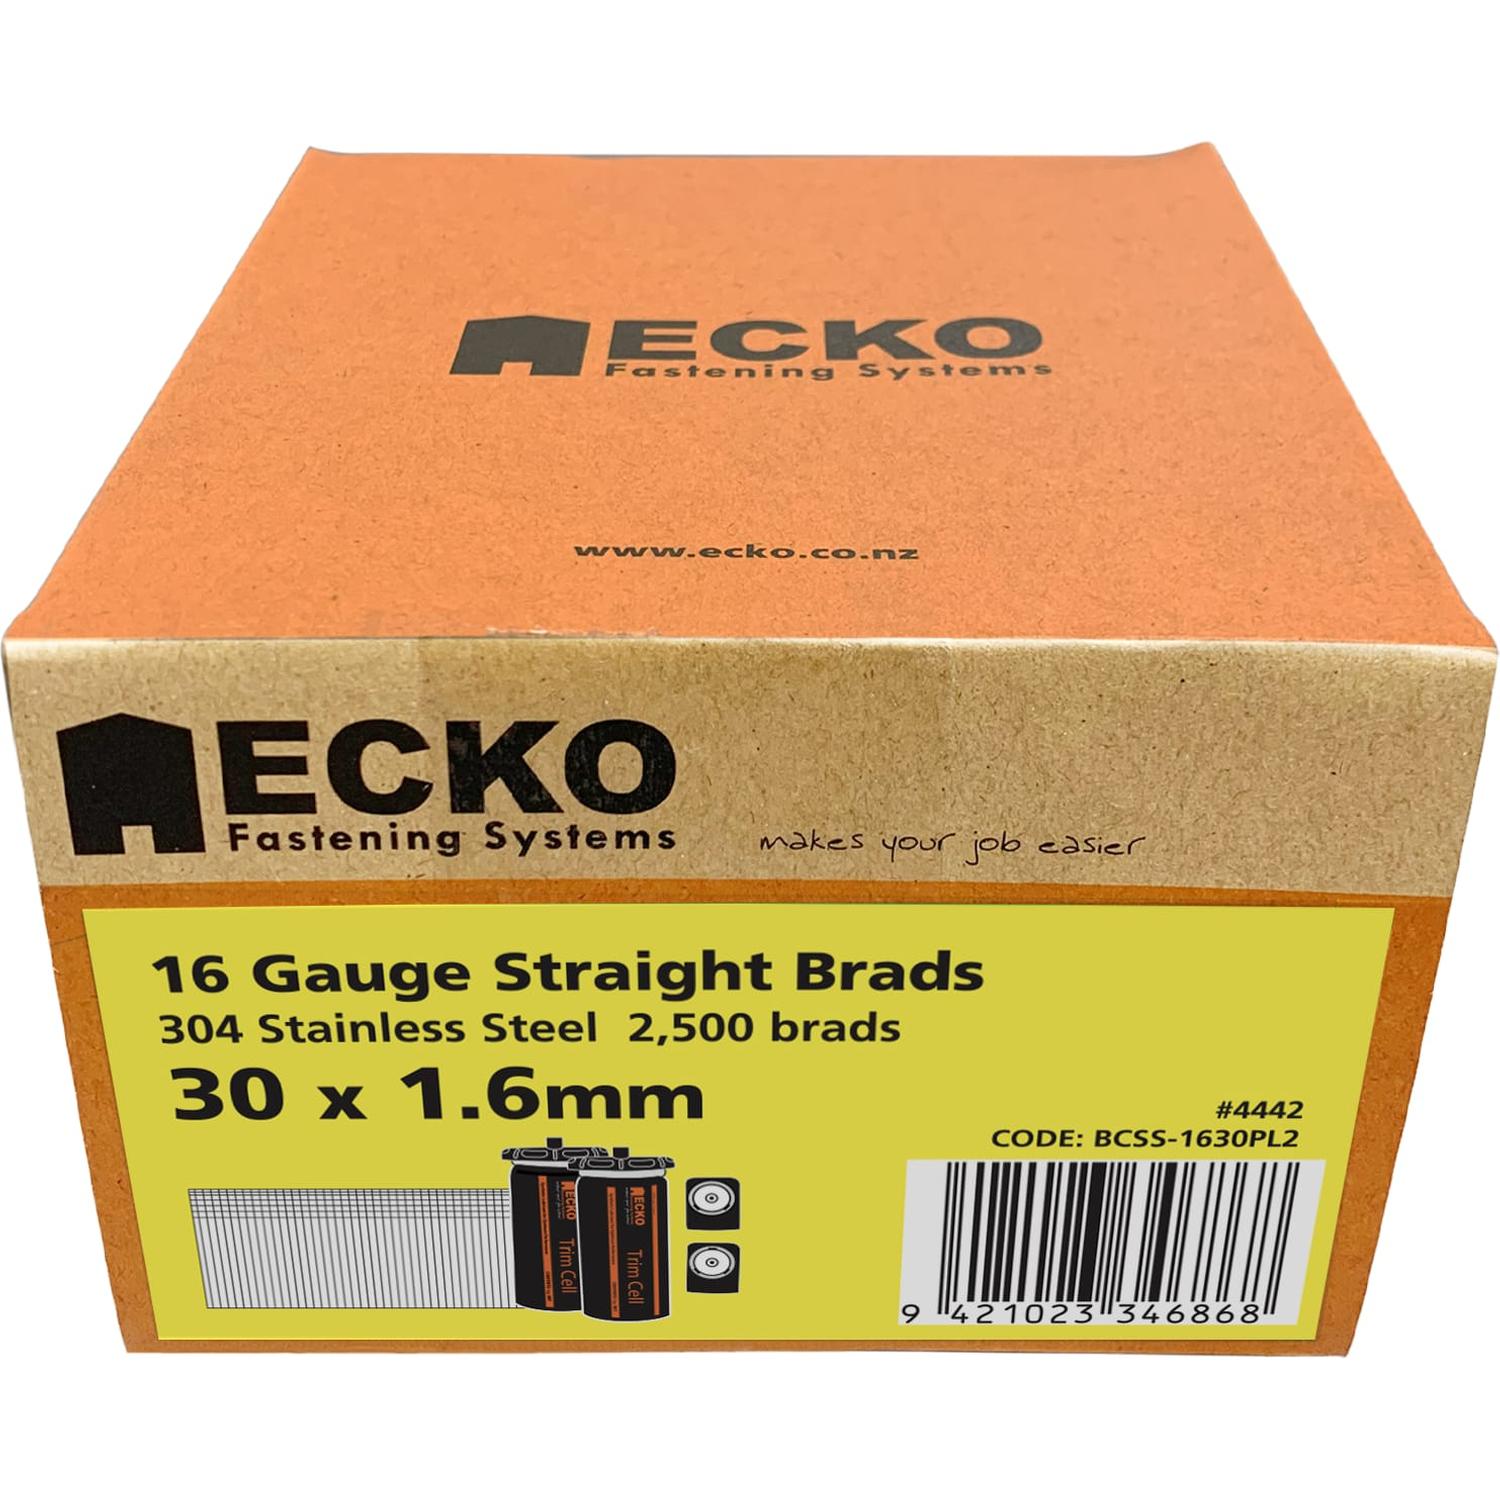 Ecko 16 Gauge Straight Brads Gas Pack 30 X 1.6Mm 304 Stainless Steel (2500/Box)